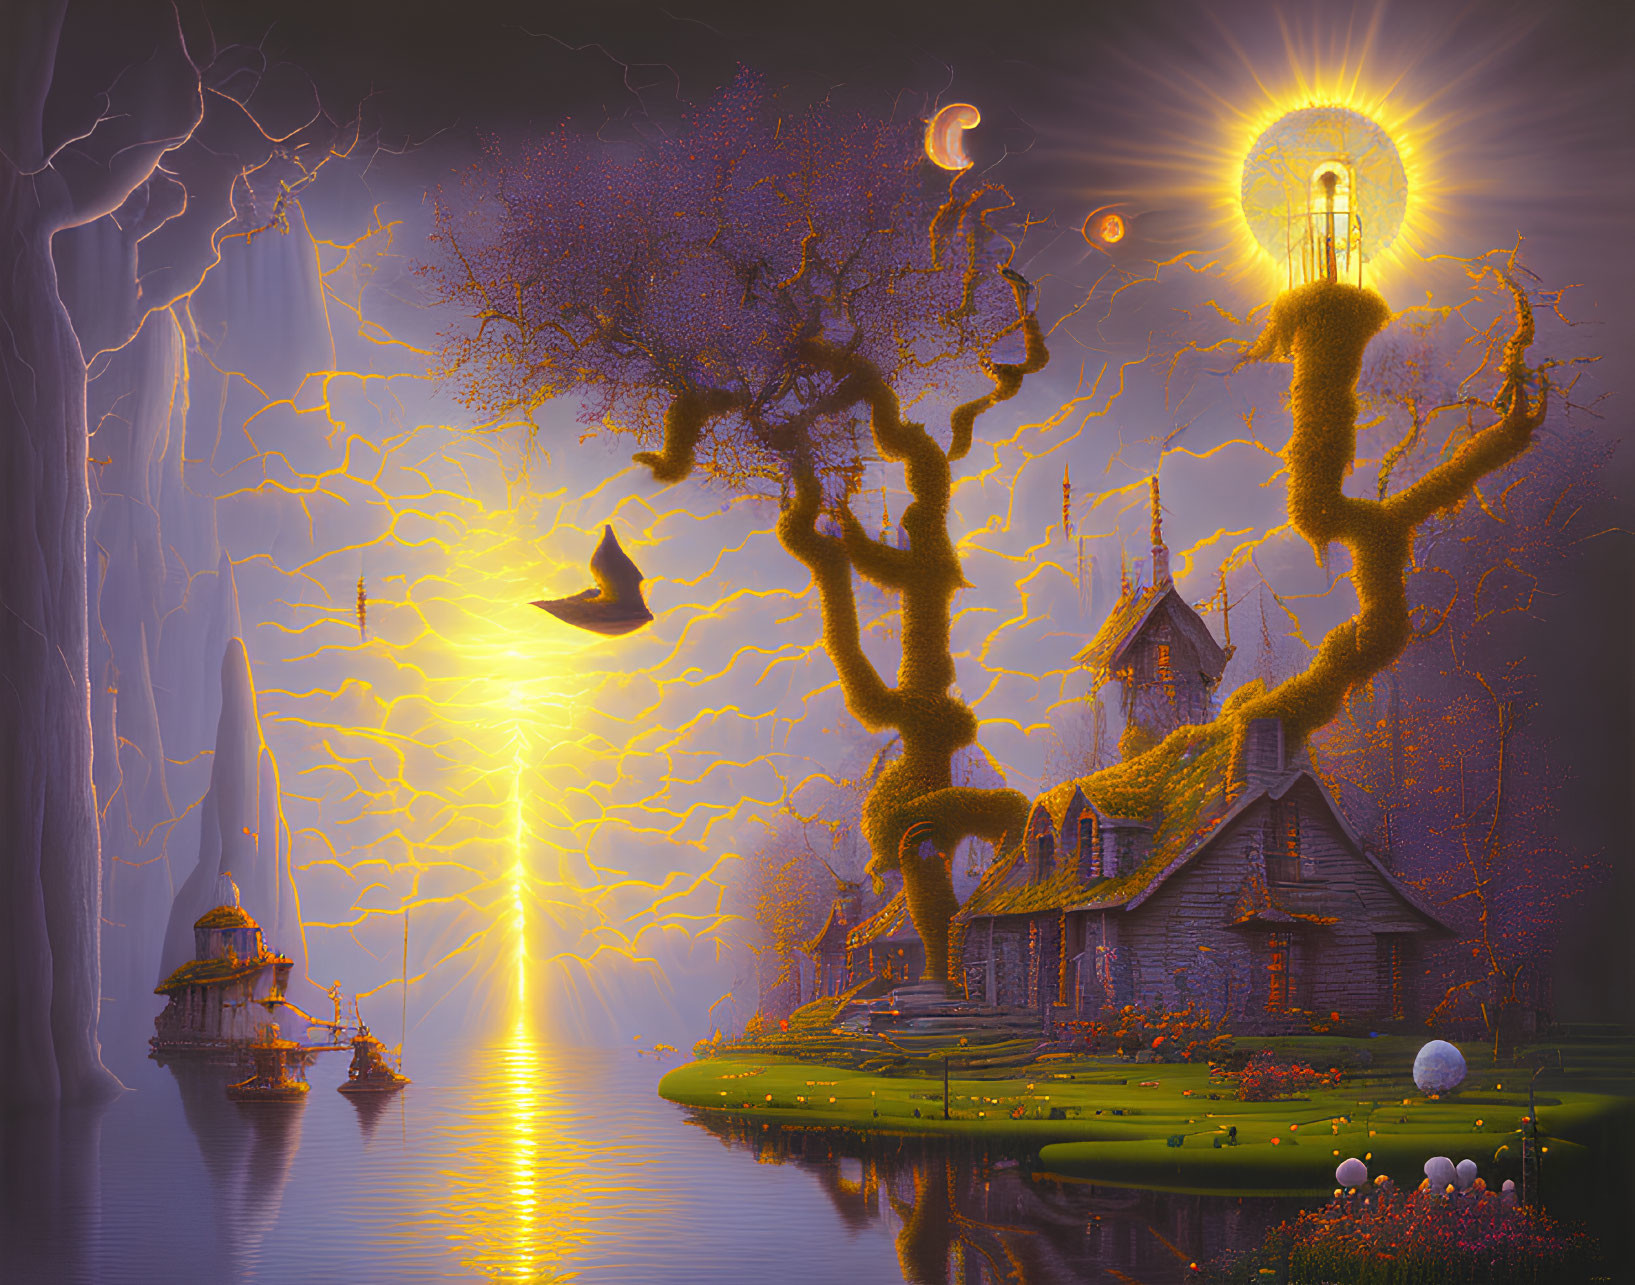 Glowing trees, bird in flight, celestial body, ethereal houses in stormy scene